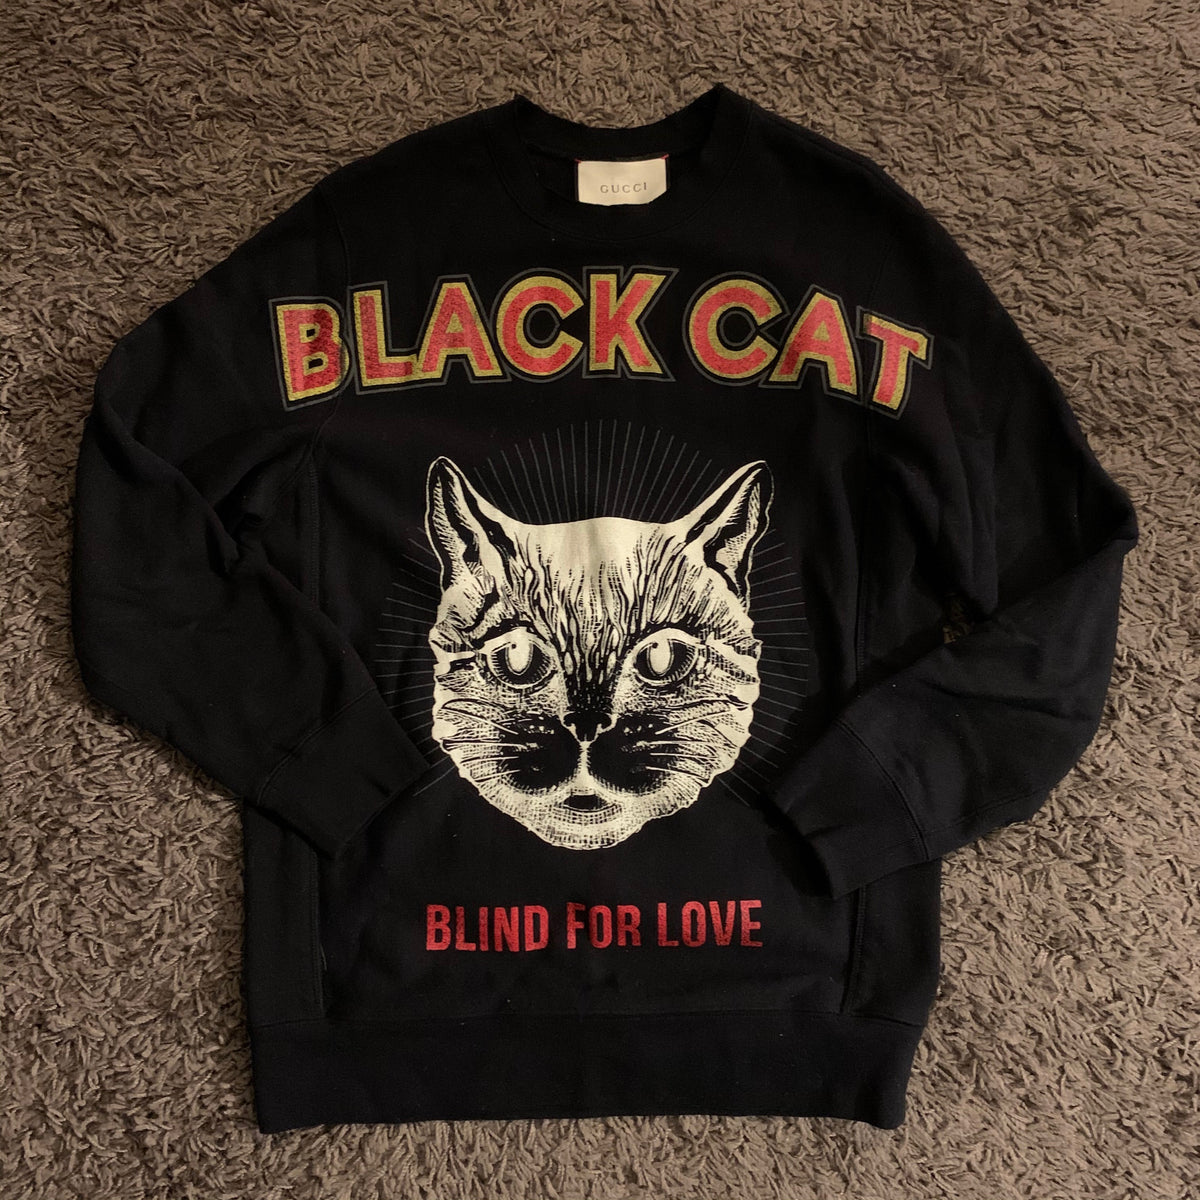 gucci black cat sweatshirt